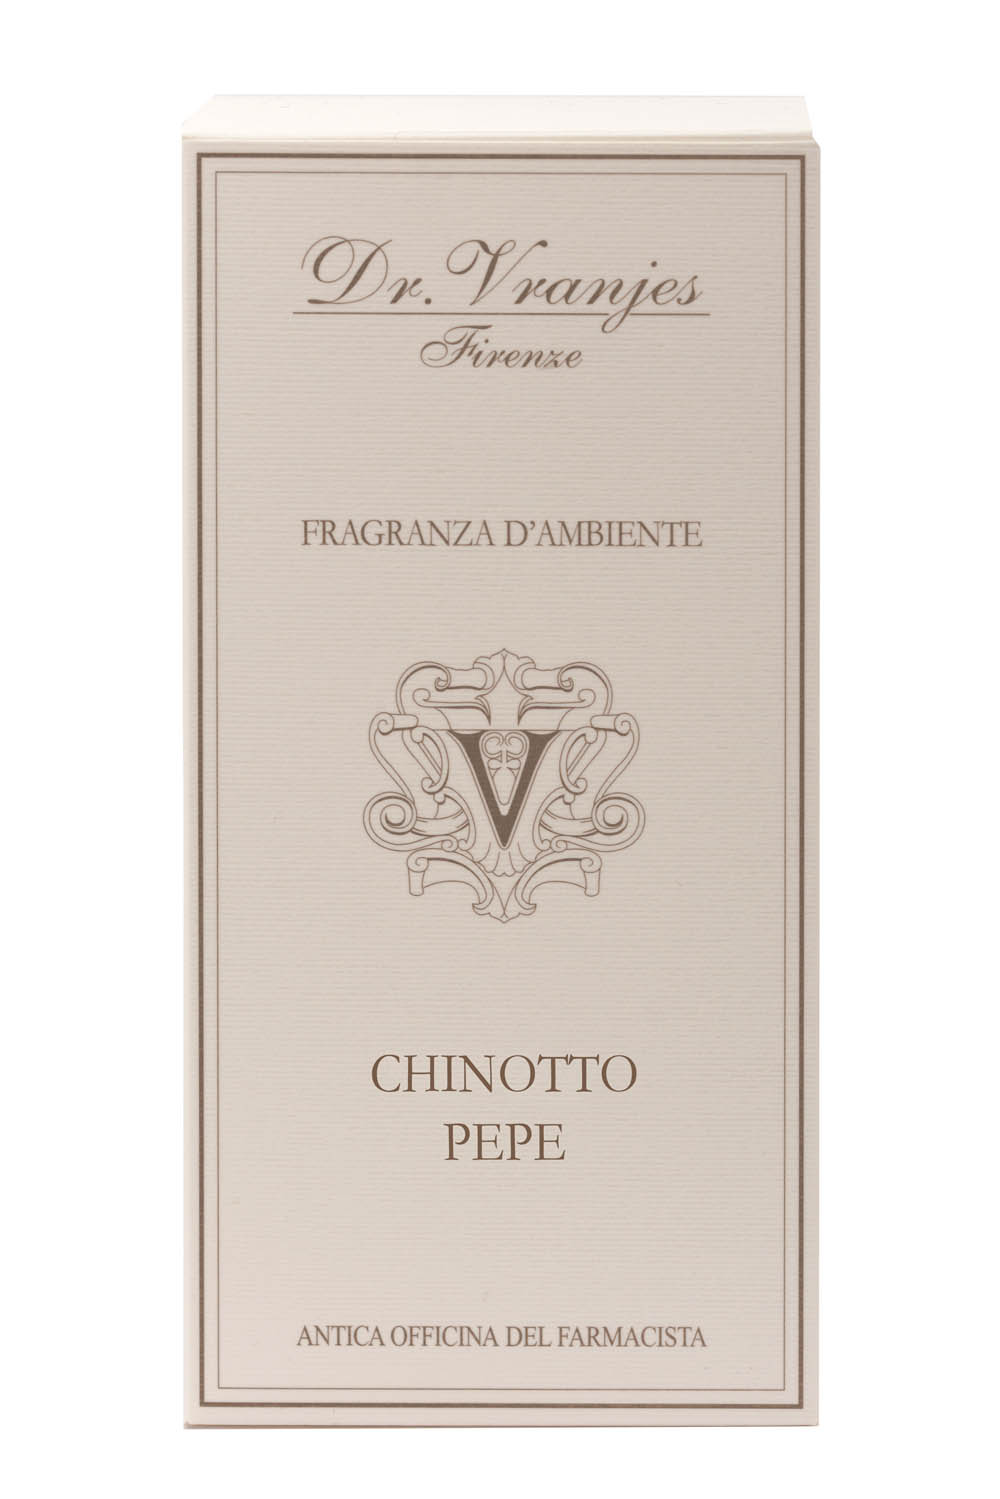 Chinotto Pepe (померанец и перец) 500 мл., Италия Dr.Vranjes